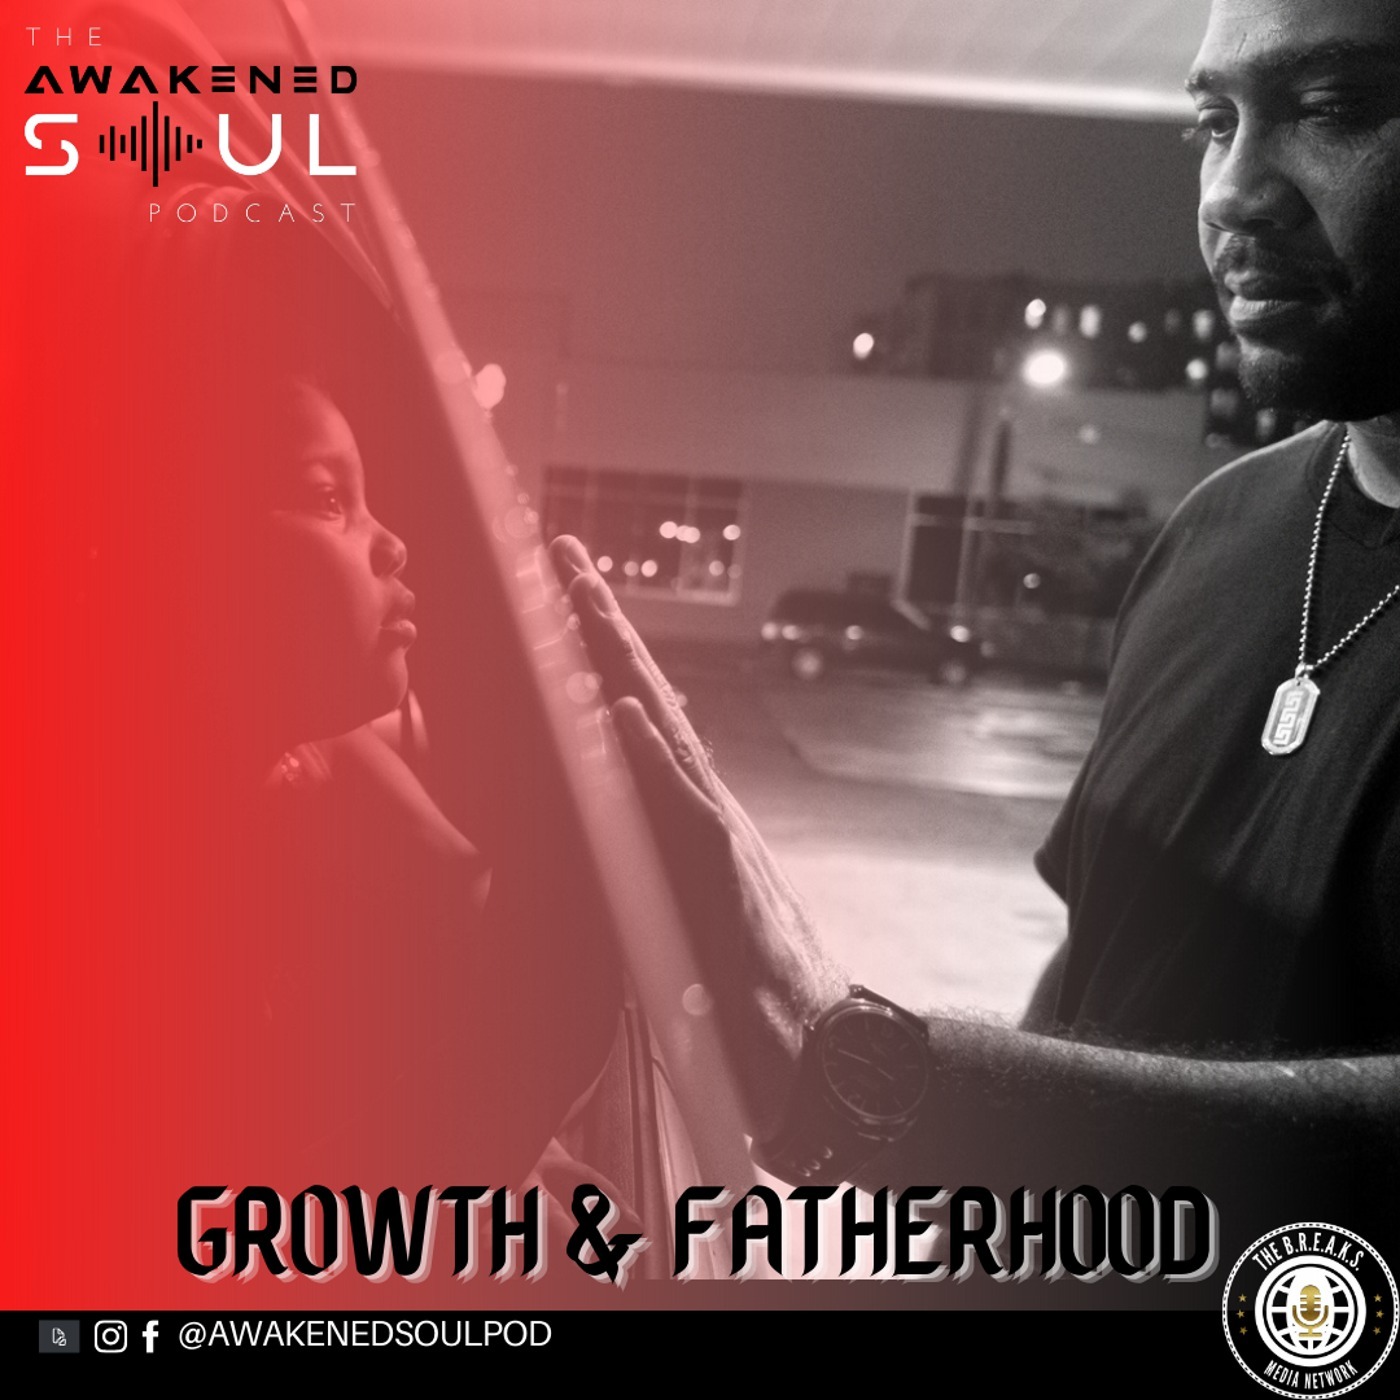 Growth & Fatherhood